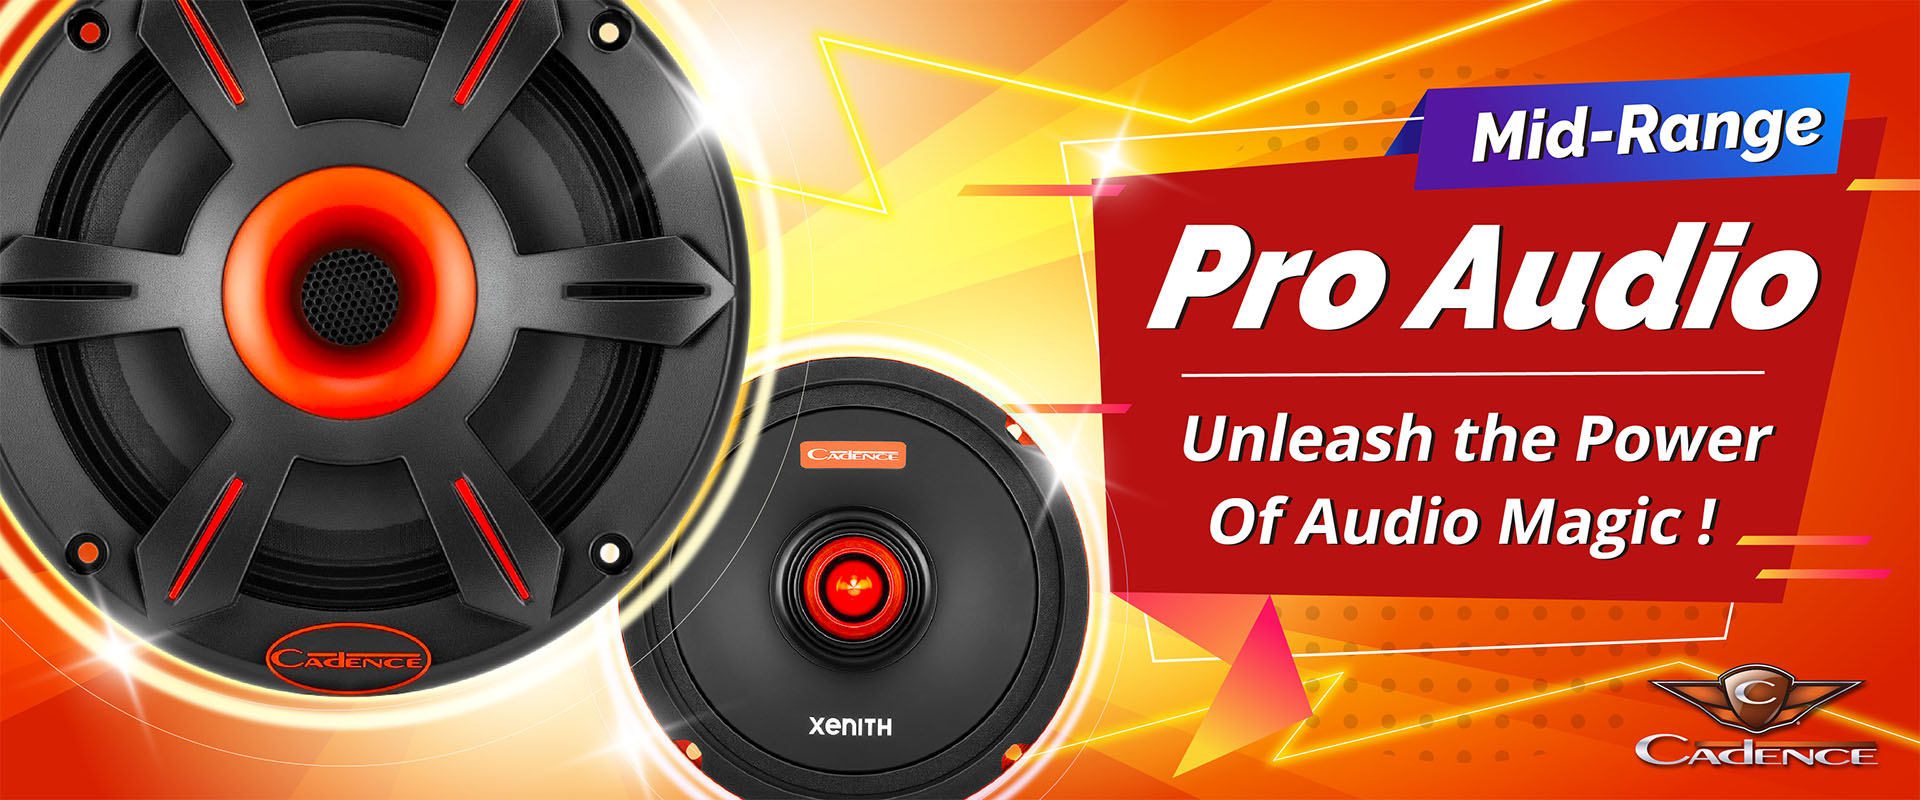 Mid-Range Pro Audio Unleash the Power of Audio Magic!